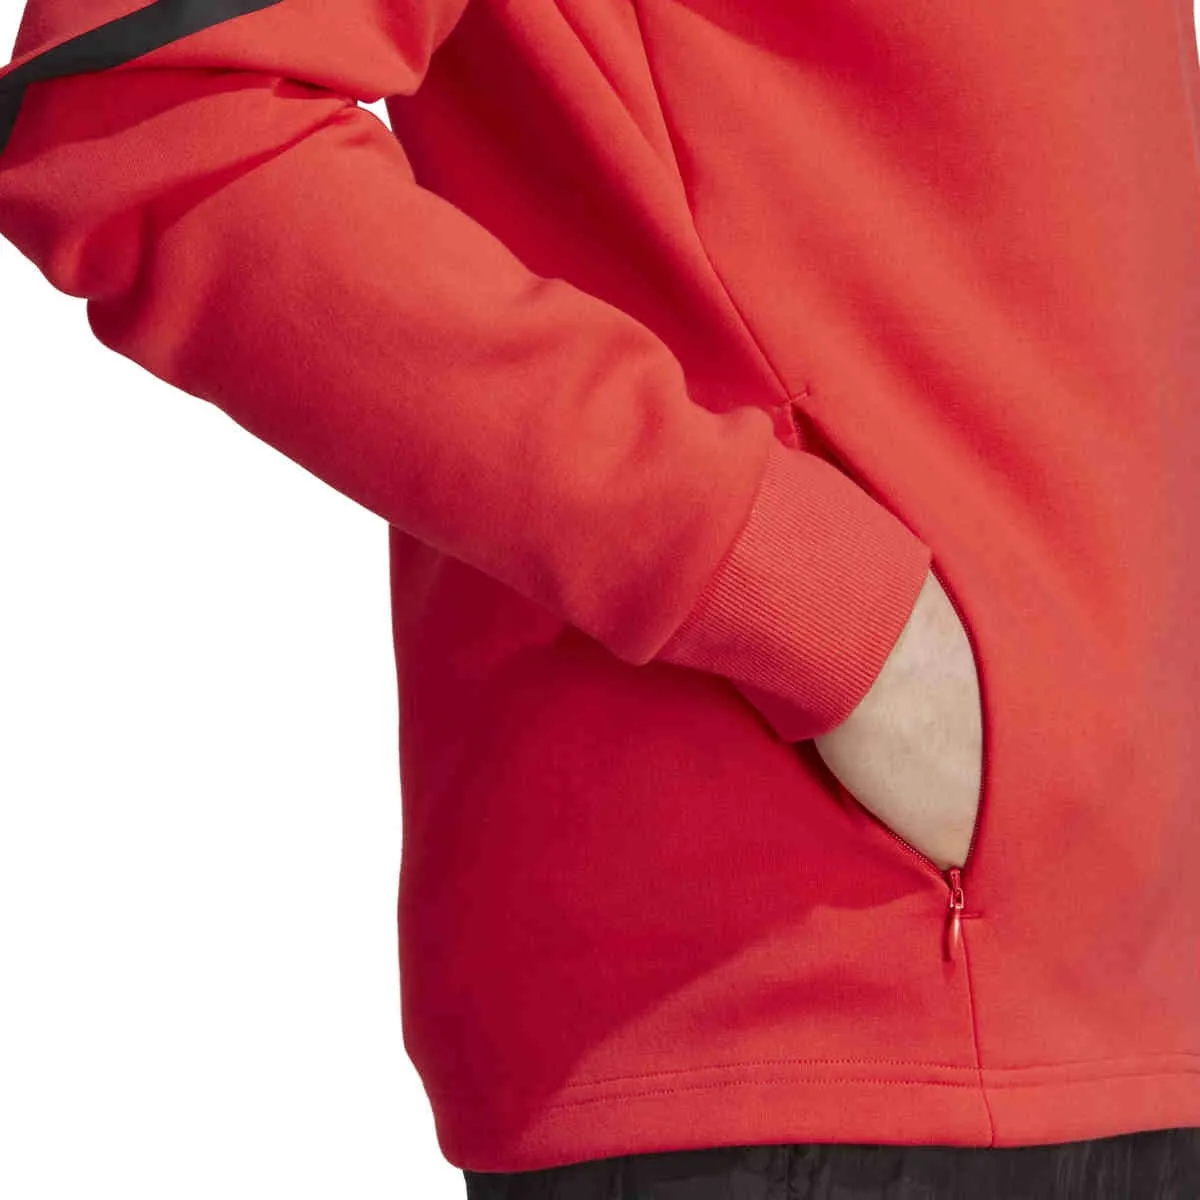 Veste à capuche adidas Designed 4 Gameday rouge clair